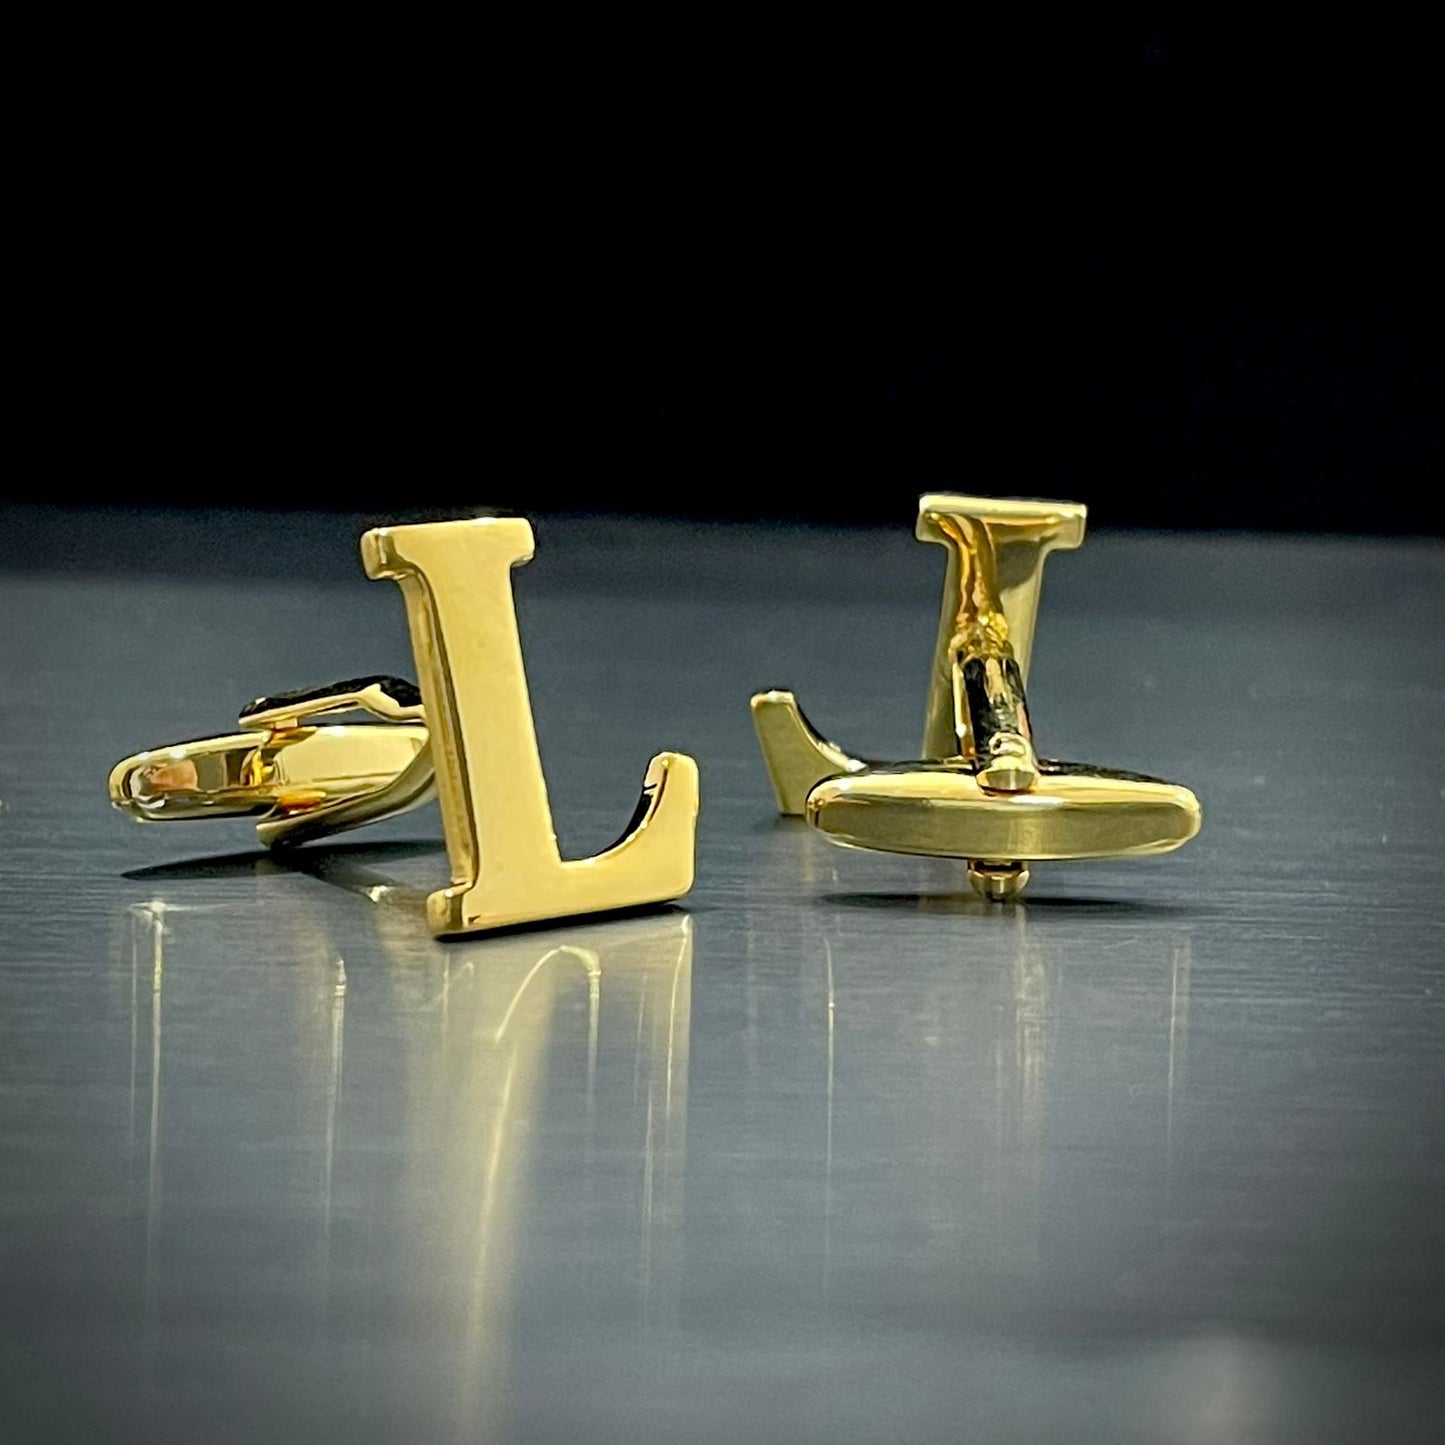 L Letter Alphabet Name Initial Golden Cufflinks For Men Online In Pakistan